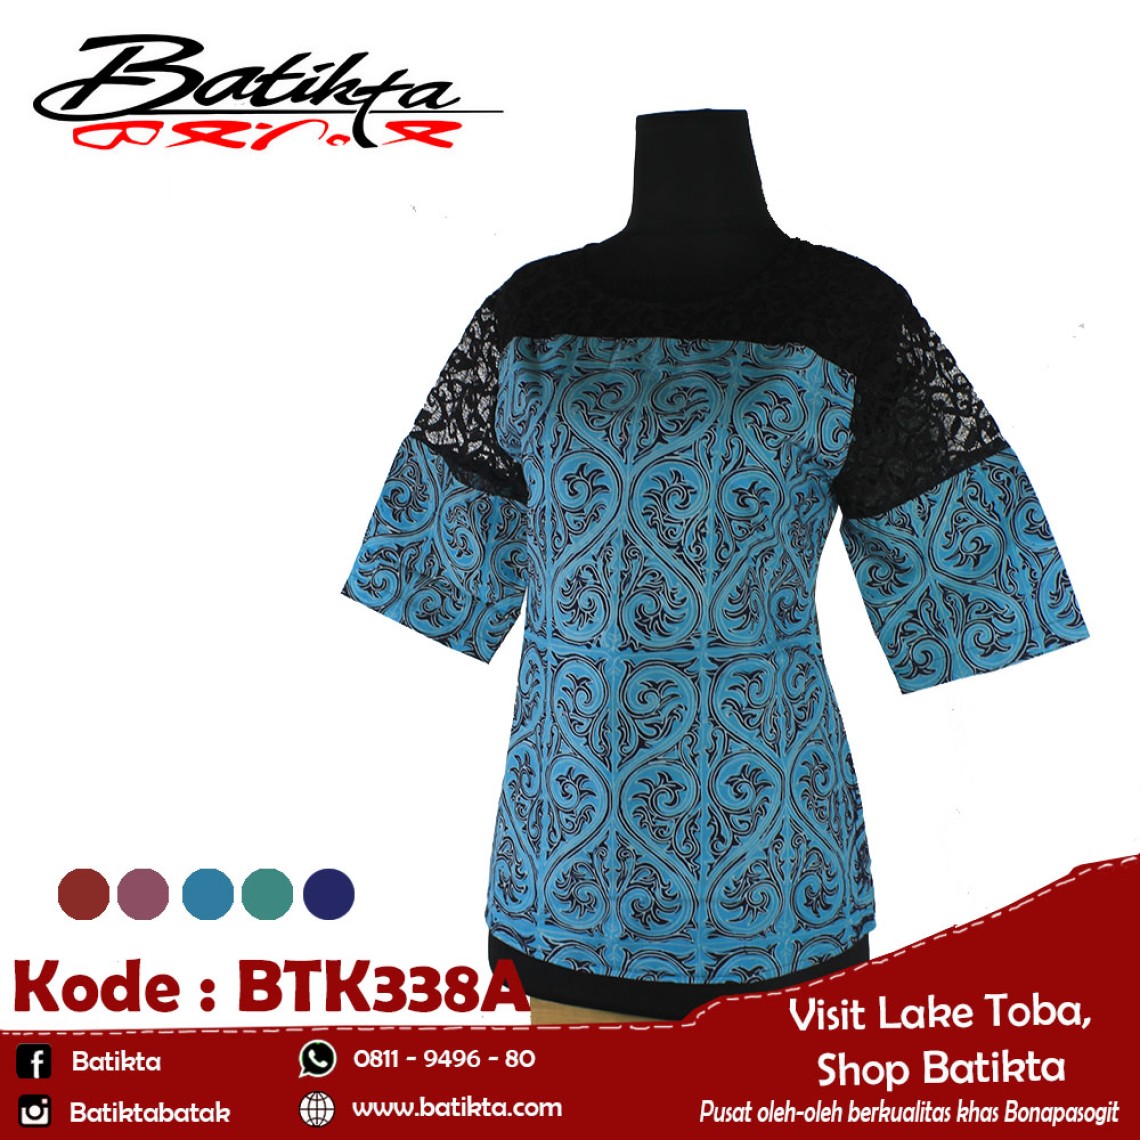 BTK338A Blus Batik Motif Gorga Warna Hijau Tosca Putih Hitam profile picture